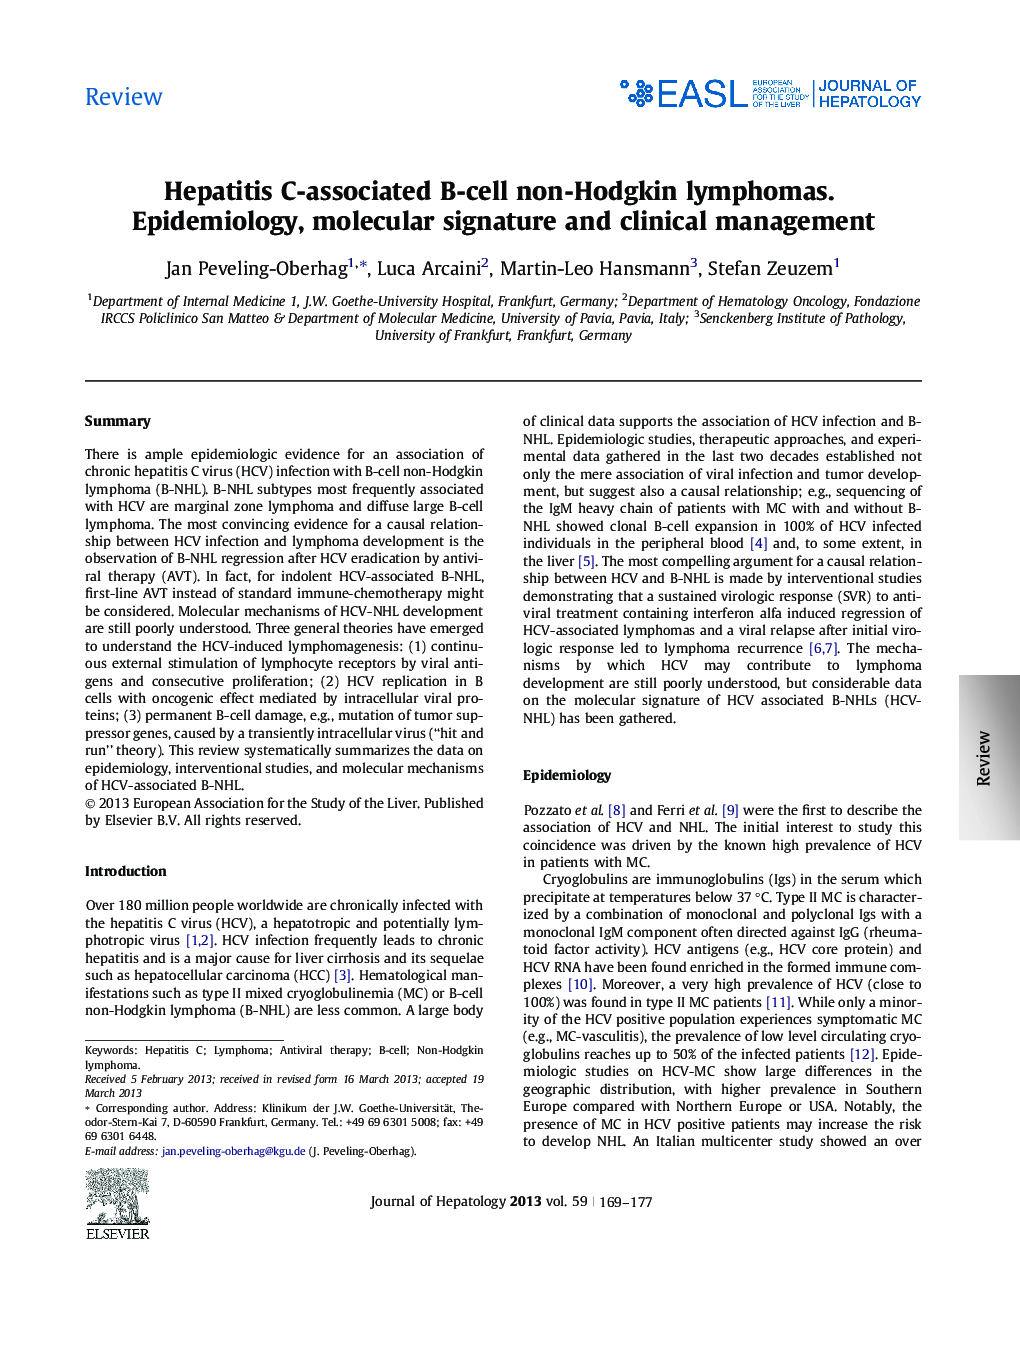 ReviewHepatitis C-associated B-cell non-Hodgkin lymphomas. Epidemiology, molecular signature and clinical management